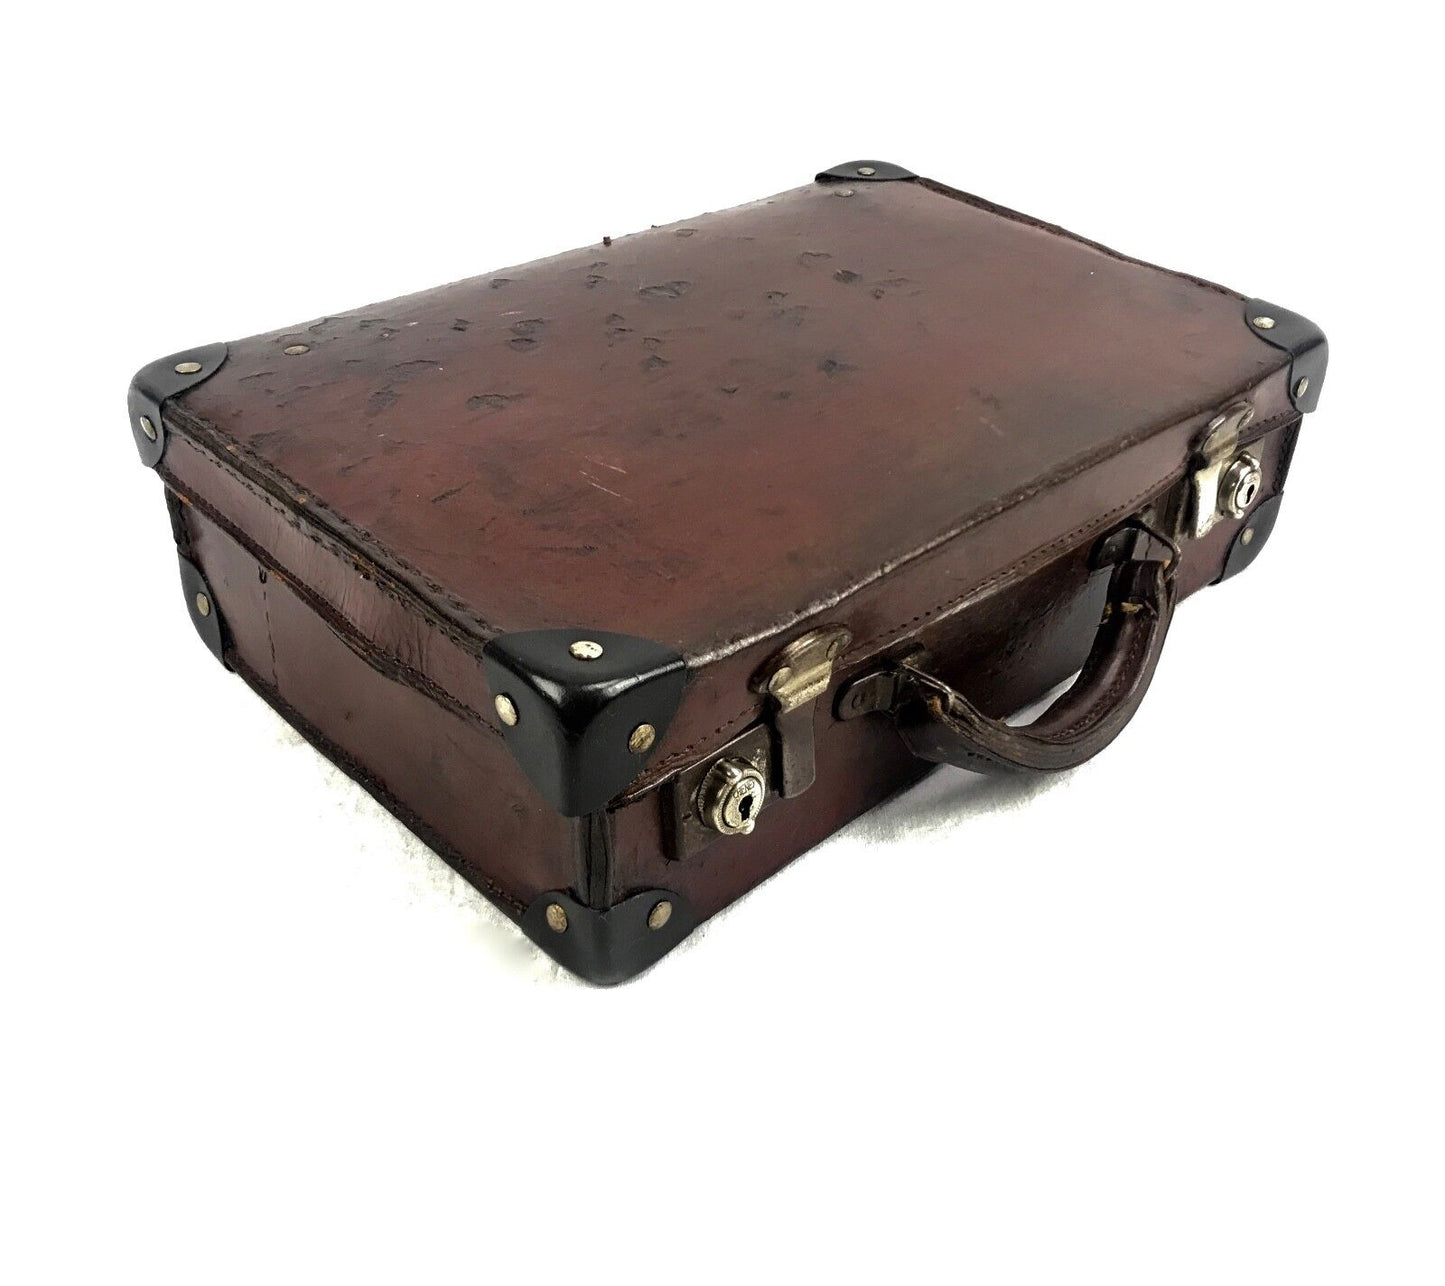 Vintage Clothing - Pakawa Leather Suitcase Trunk / Travel Bag / Harrods London